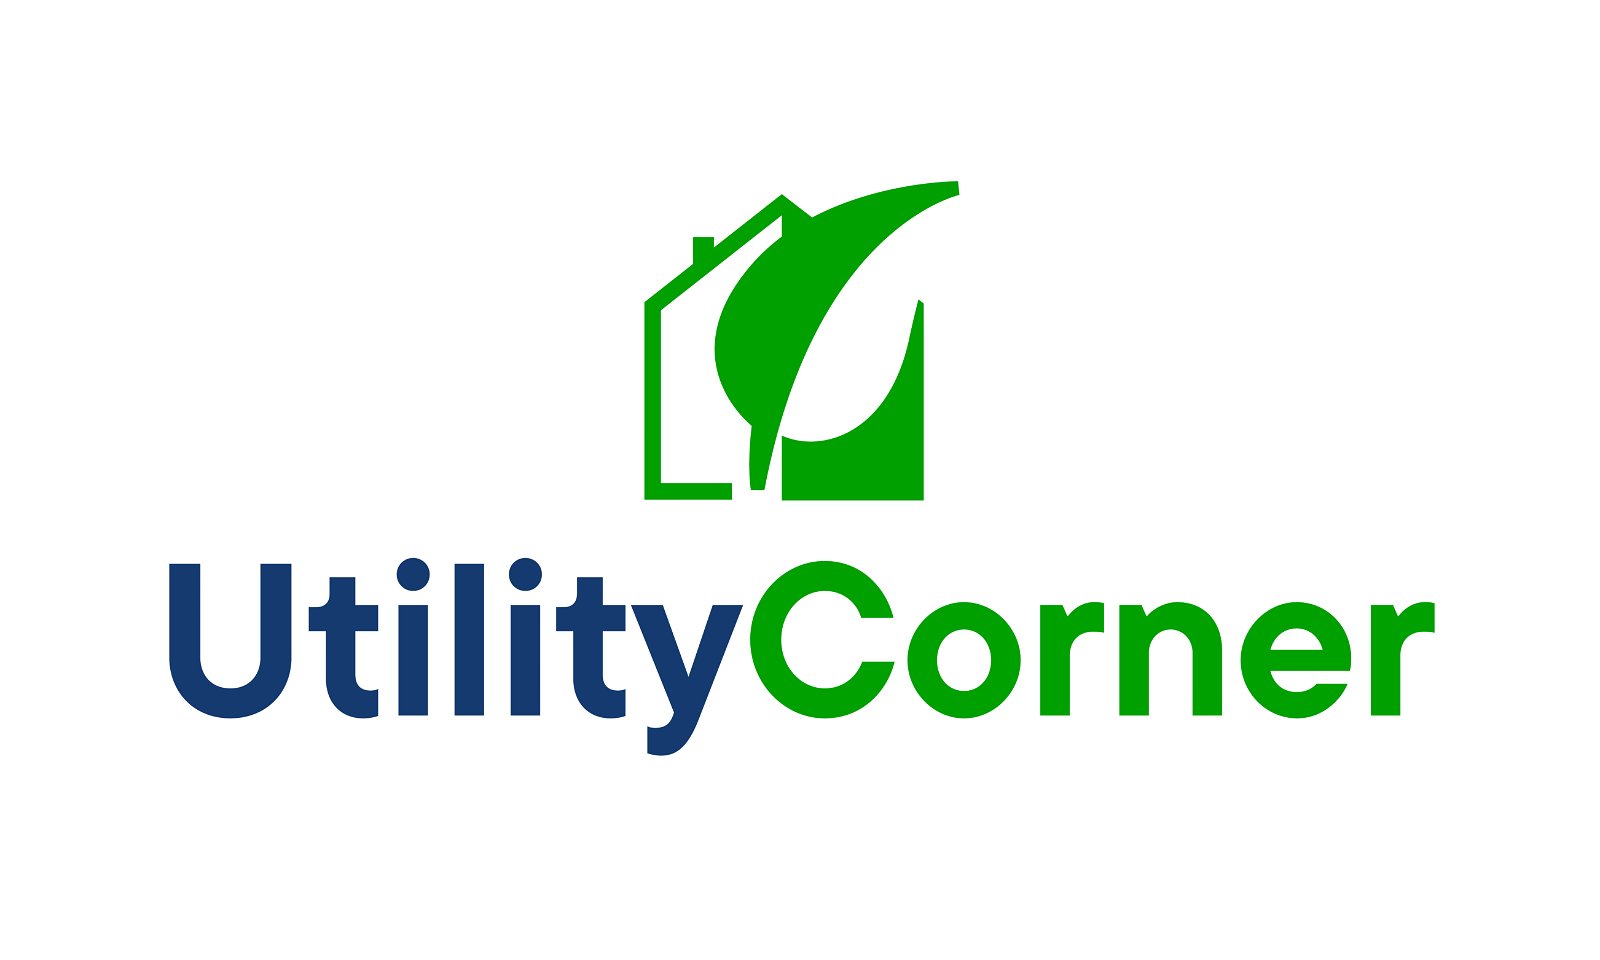 UtilityCorner.com - Creative brandable domain for sale